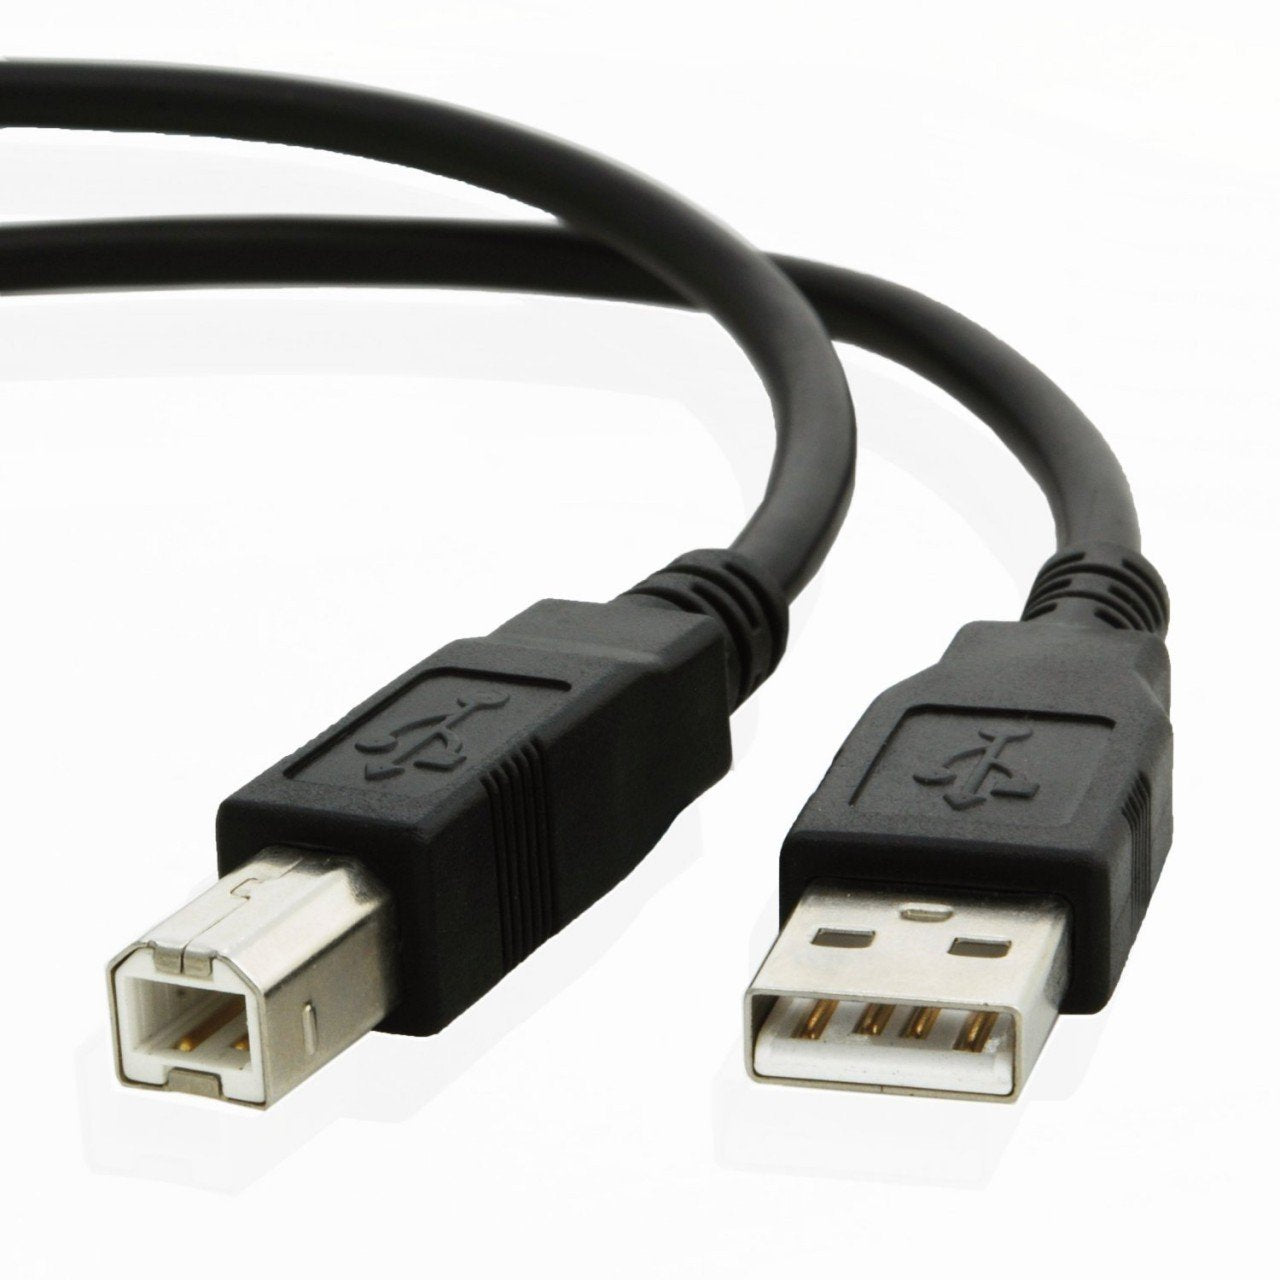 USB cable for Canon PIXMA CP1200